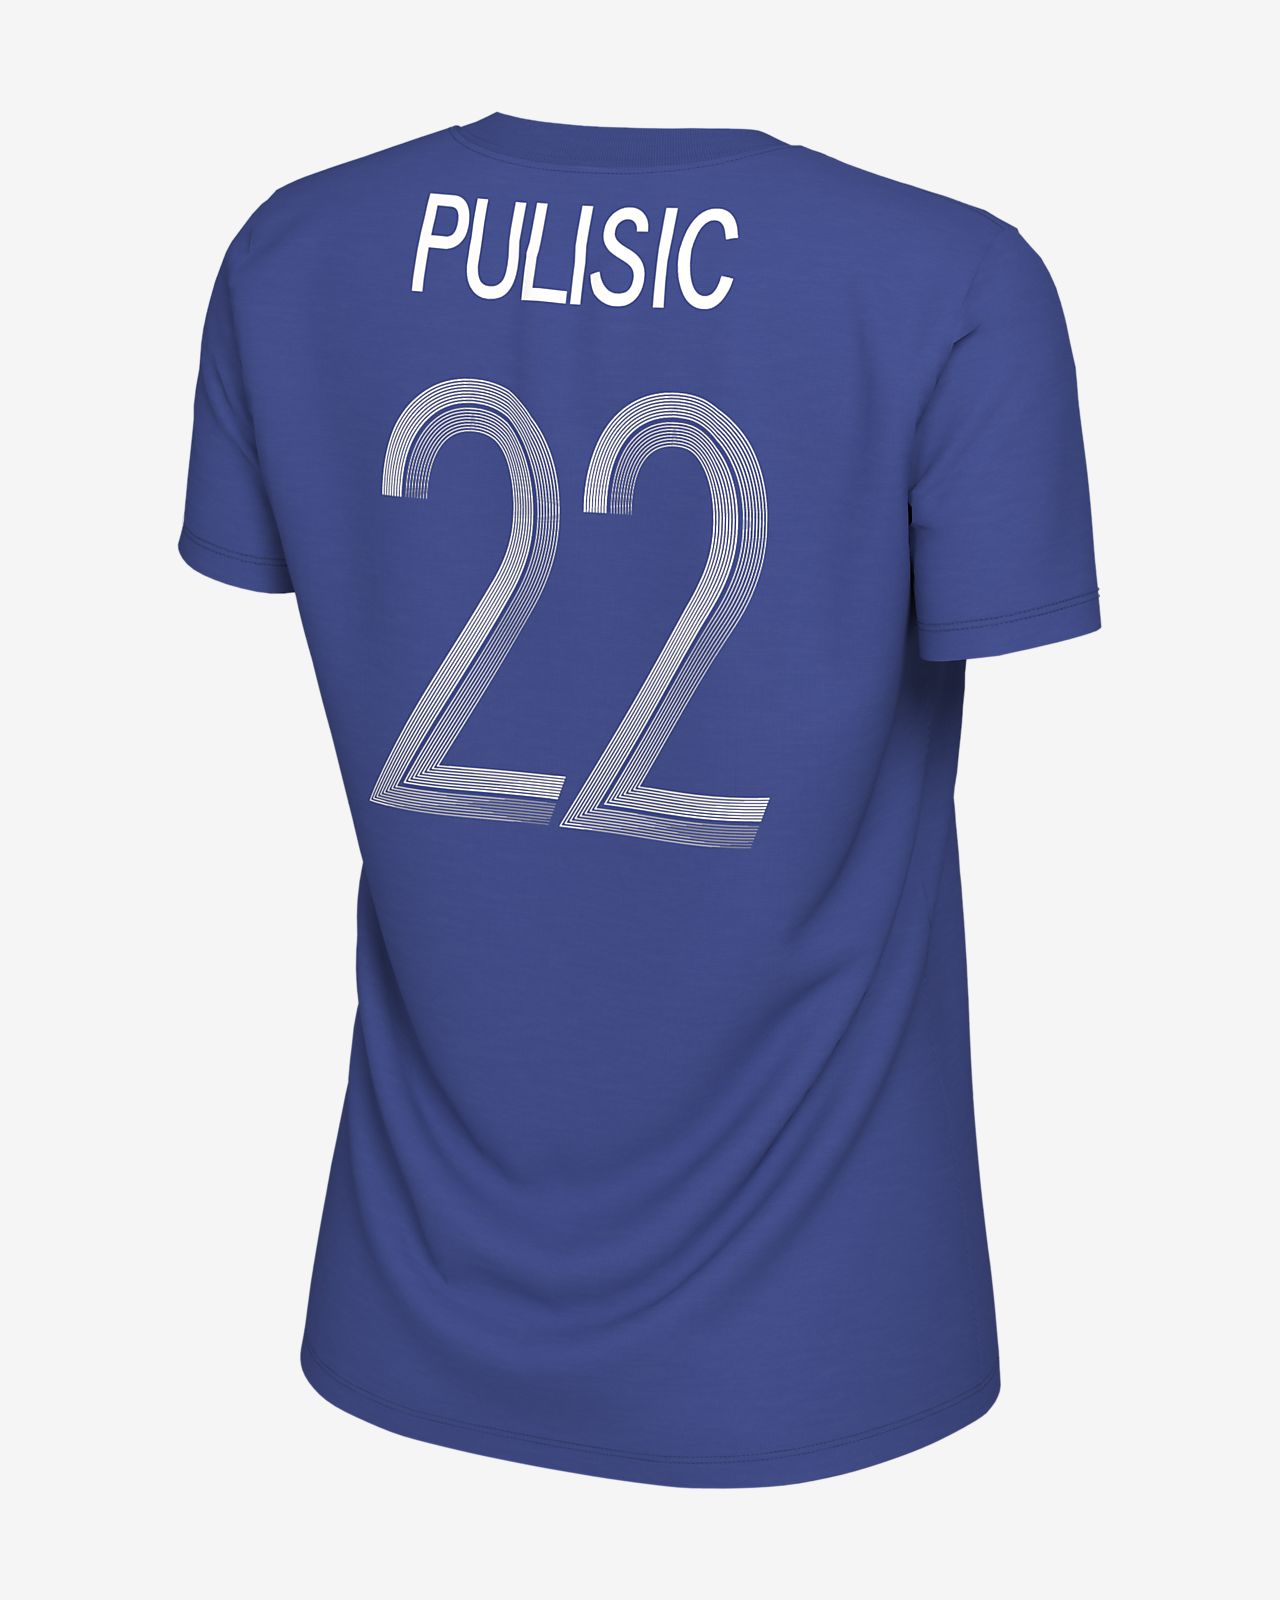 Chelsea FC (Pulisic) Women's Soccer T-Shirt. Nike.com